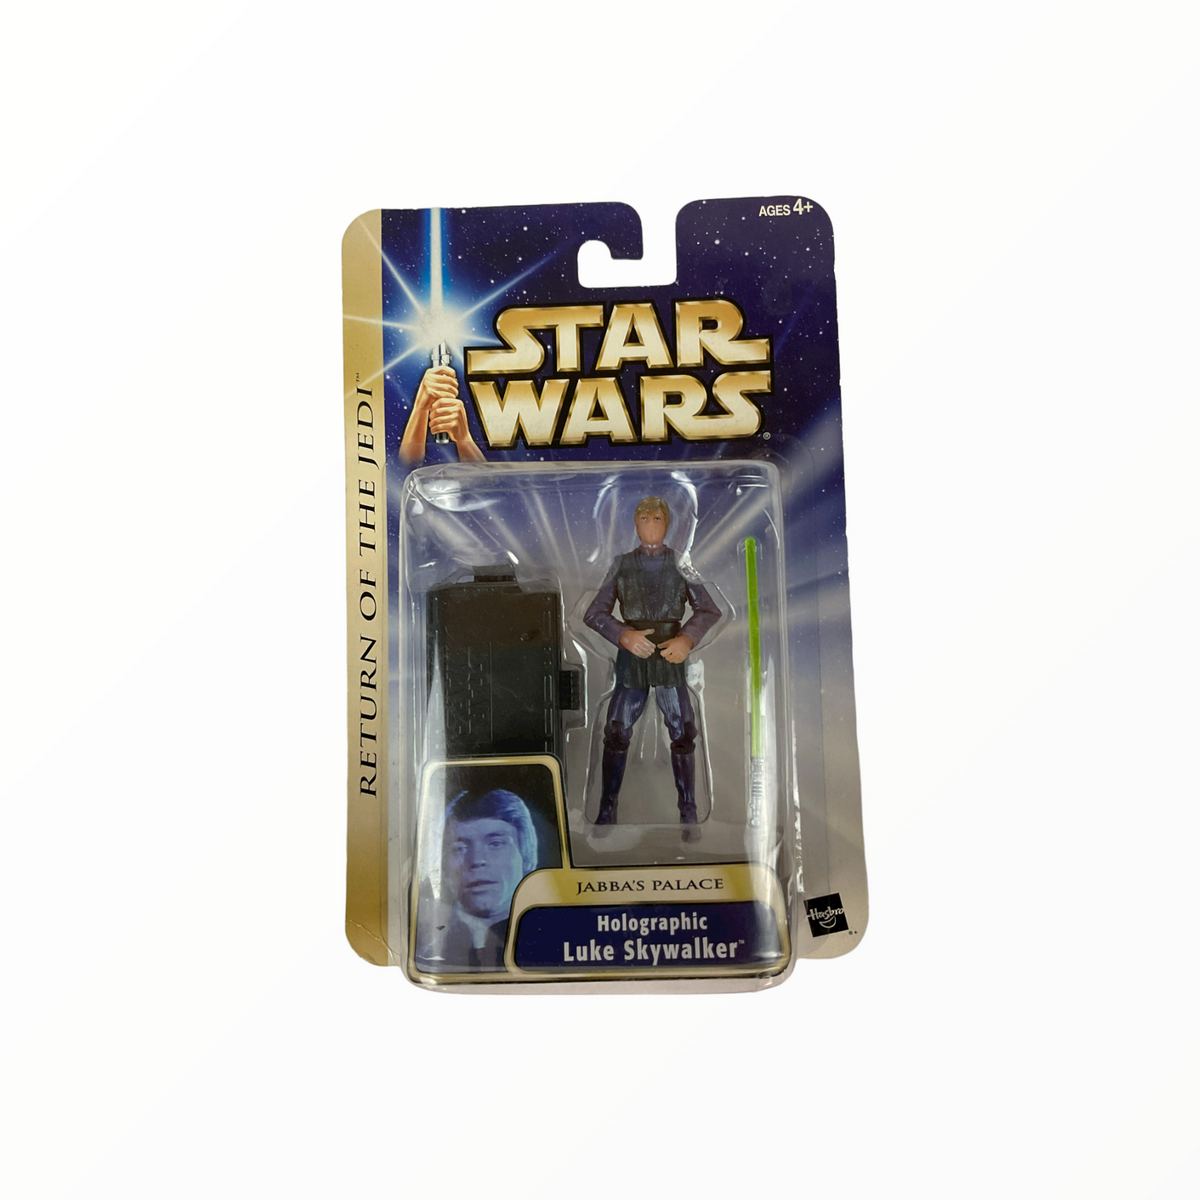 Star Wars-Holographic Luke Skywalker - Jabba Palace